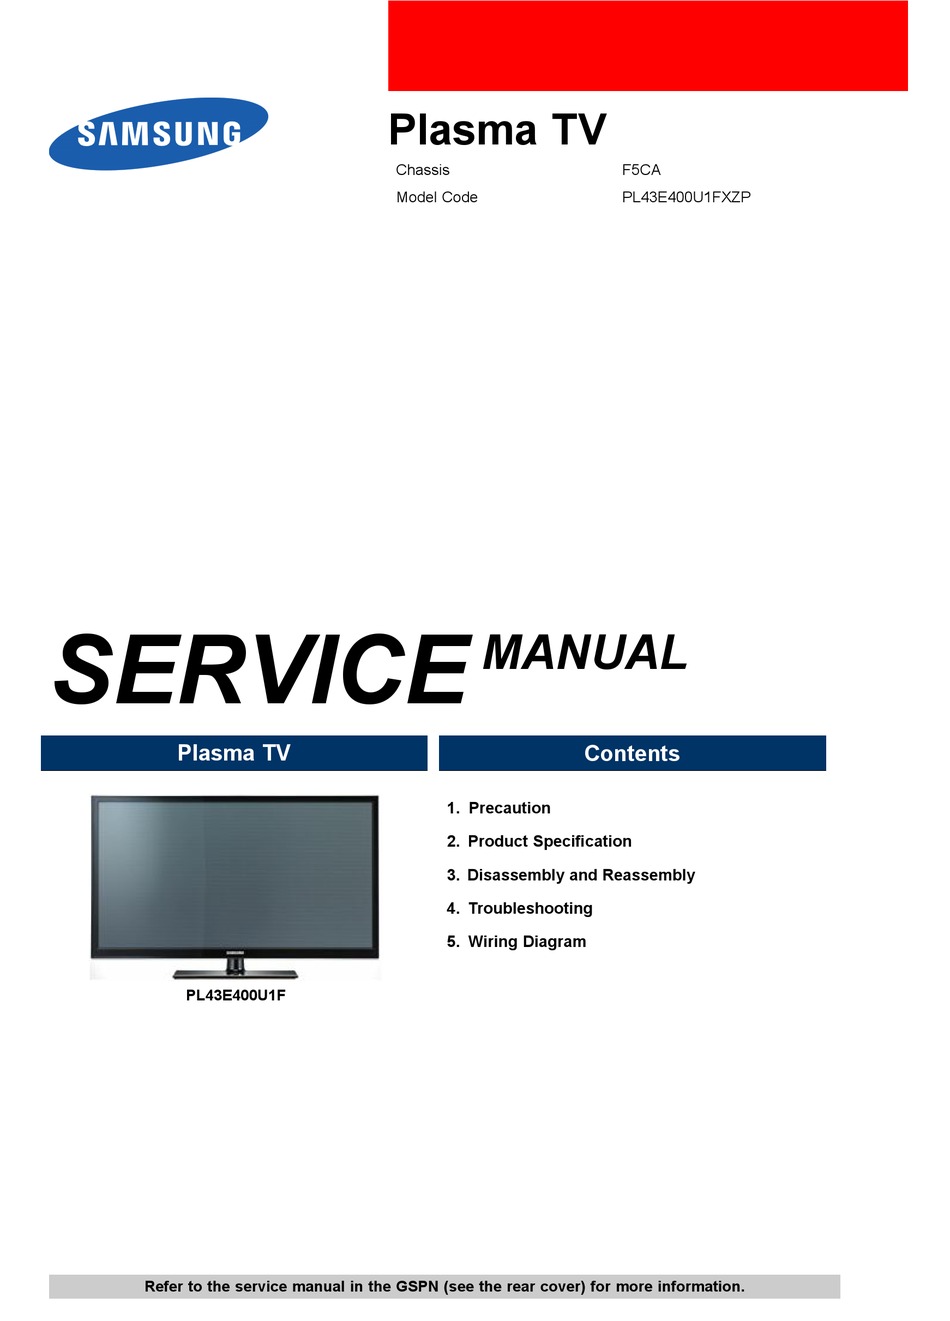 SAMSUNG PL43E400U1F SERVICE MANUAL Pdf Download | ManualsLib